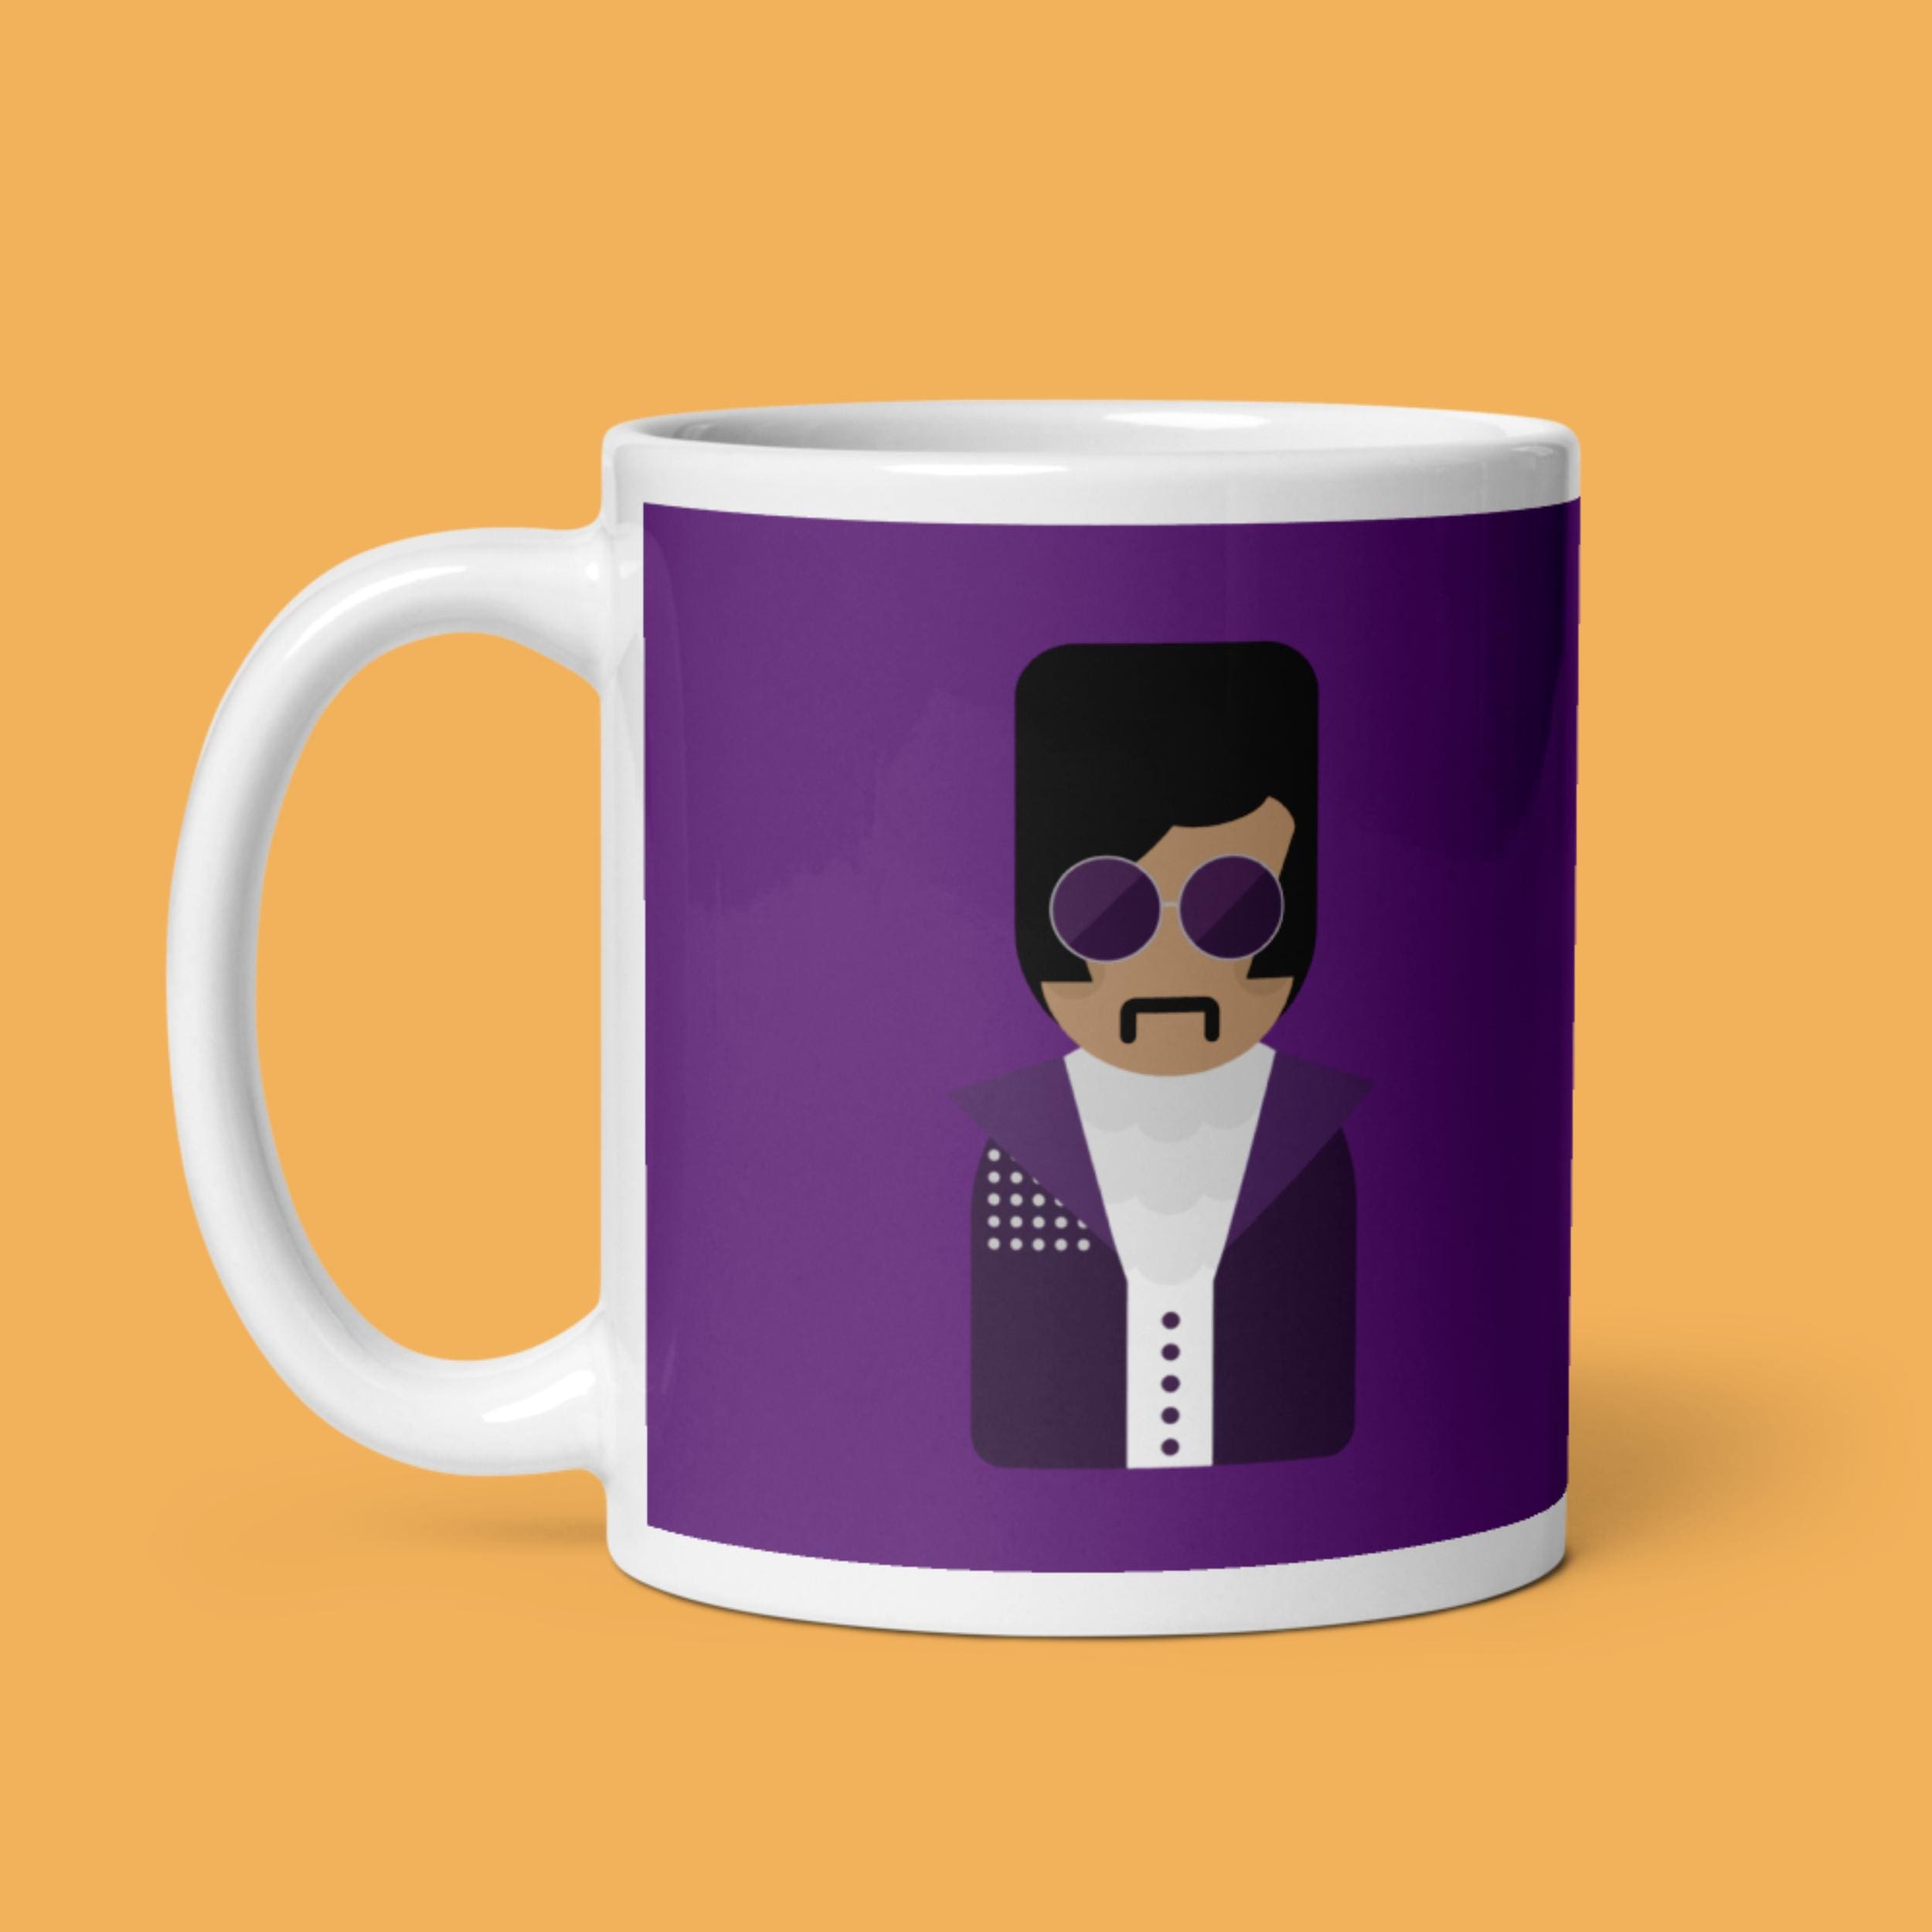 11oz Ceramic Mug - Prince - Little Icons